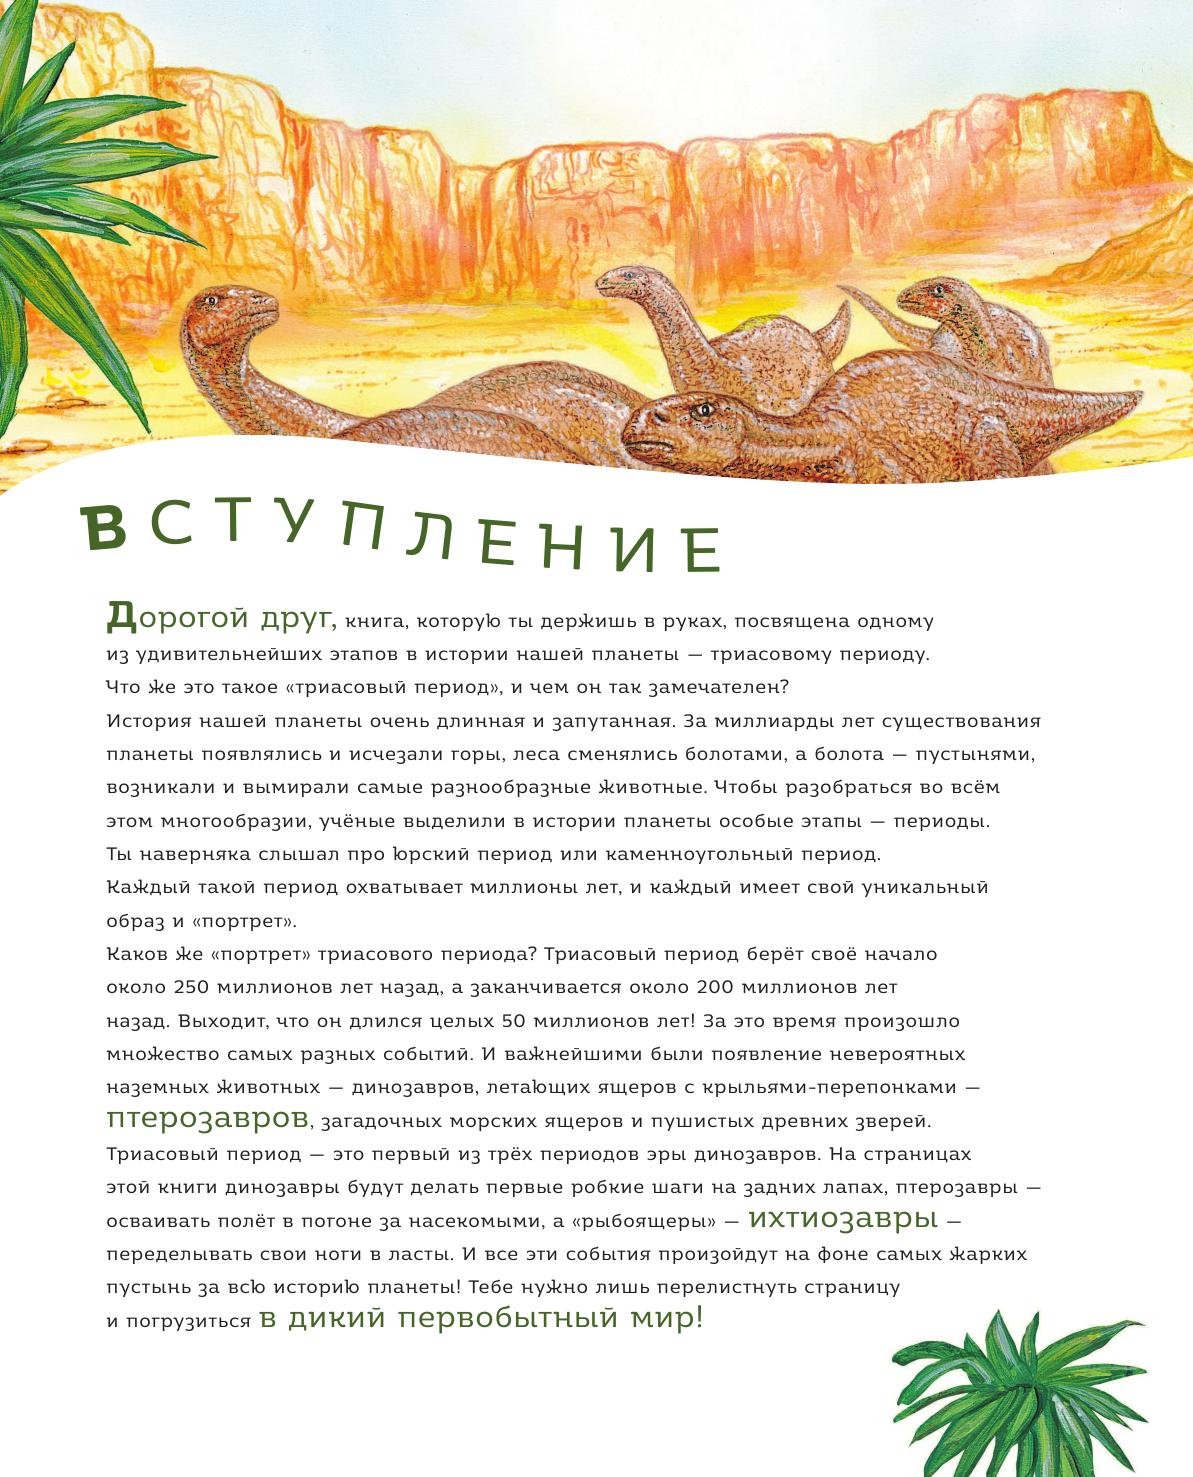 Динозавры триасового периода (Попов Ярослав Александрович) - фото №5